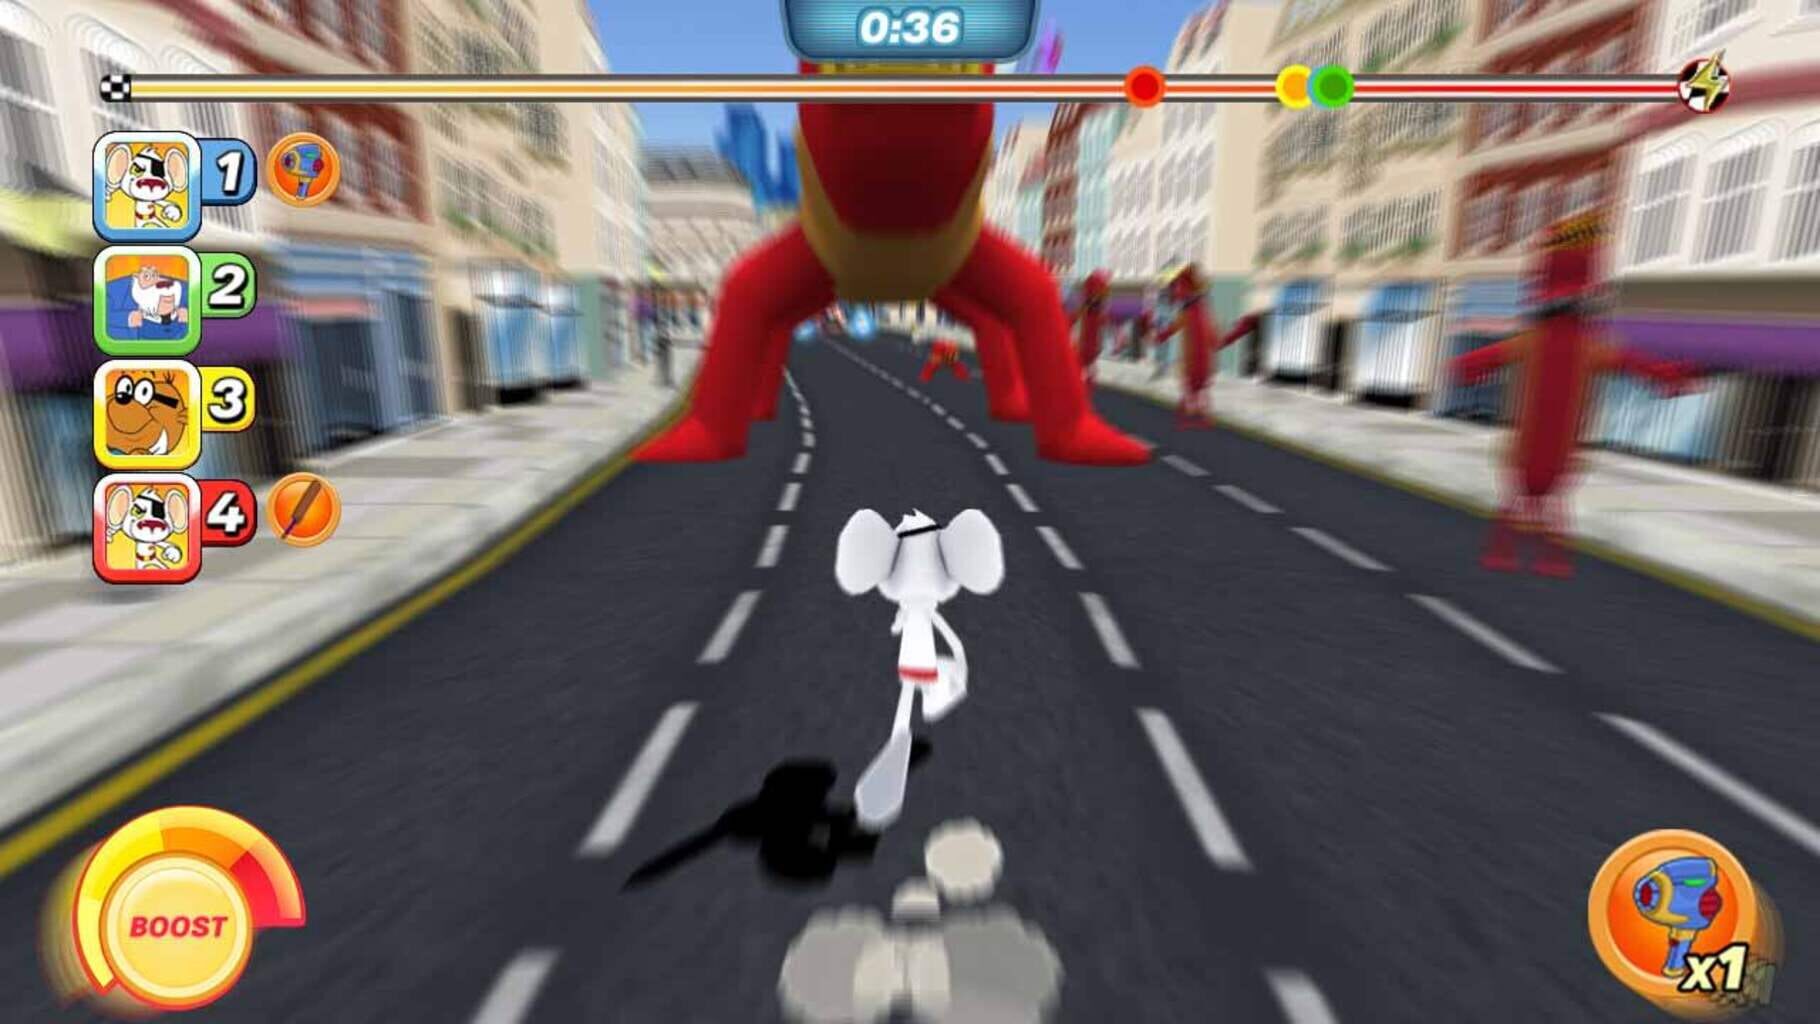 Danger Mouse: The Danger Games screenshot